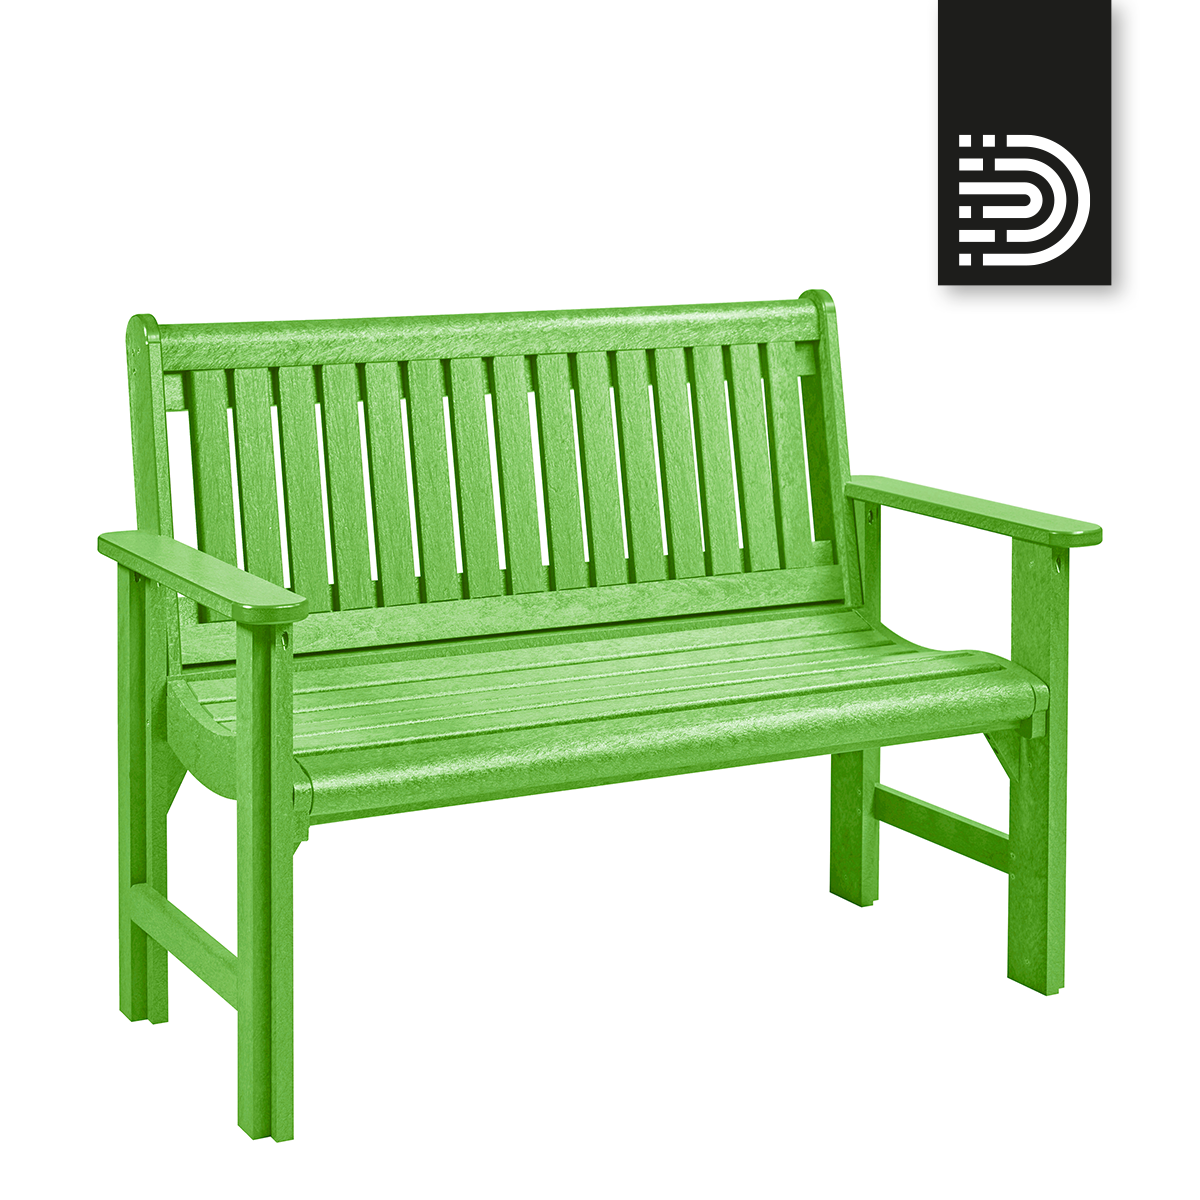 B01 4' Premium Garden Bench- kiwi green 17